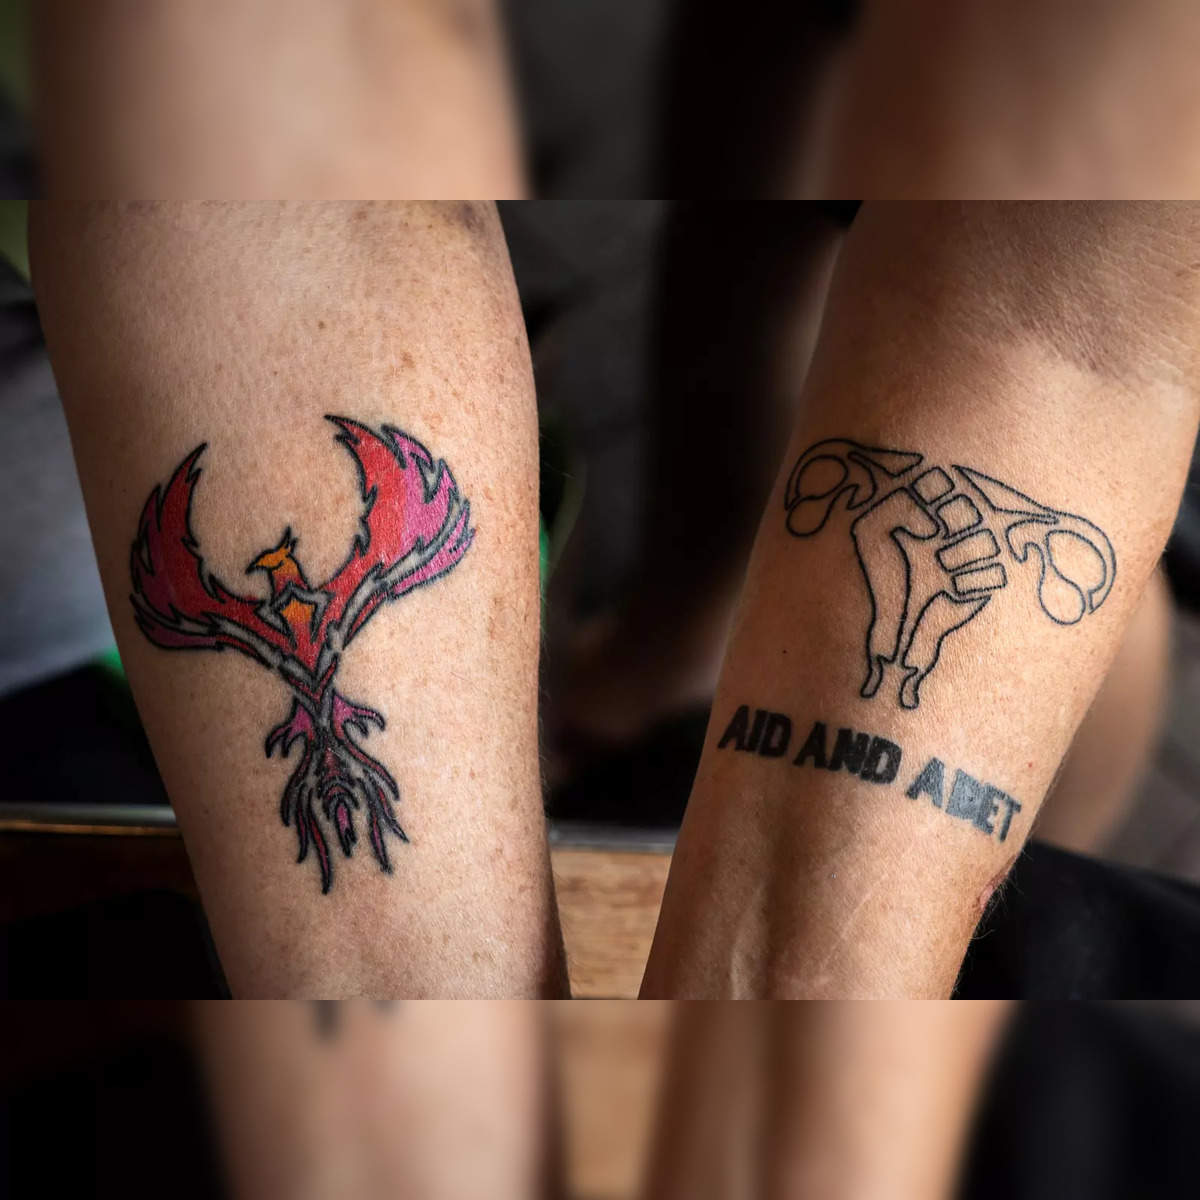 Tattoo Guru - The most adorable bandaid you've ever seen, by Bun  #baltimoretattooartist #marylandtattooartist #tattooguru  #baltimoretattooguru #buntheartist #elbowtattoo #bandagetattoo #bandaid  #bandaidtattoo #bandage #adorabletattoo #cryingtattoo ...